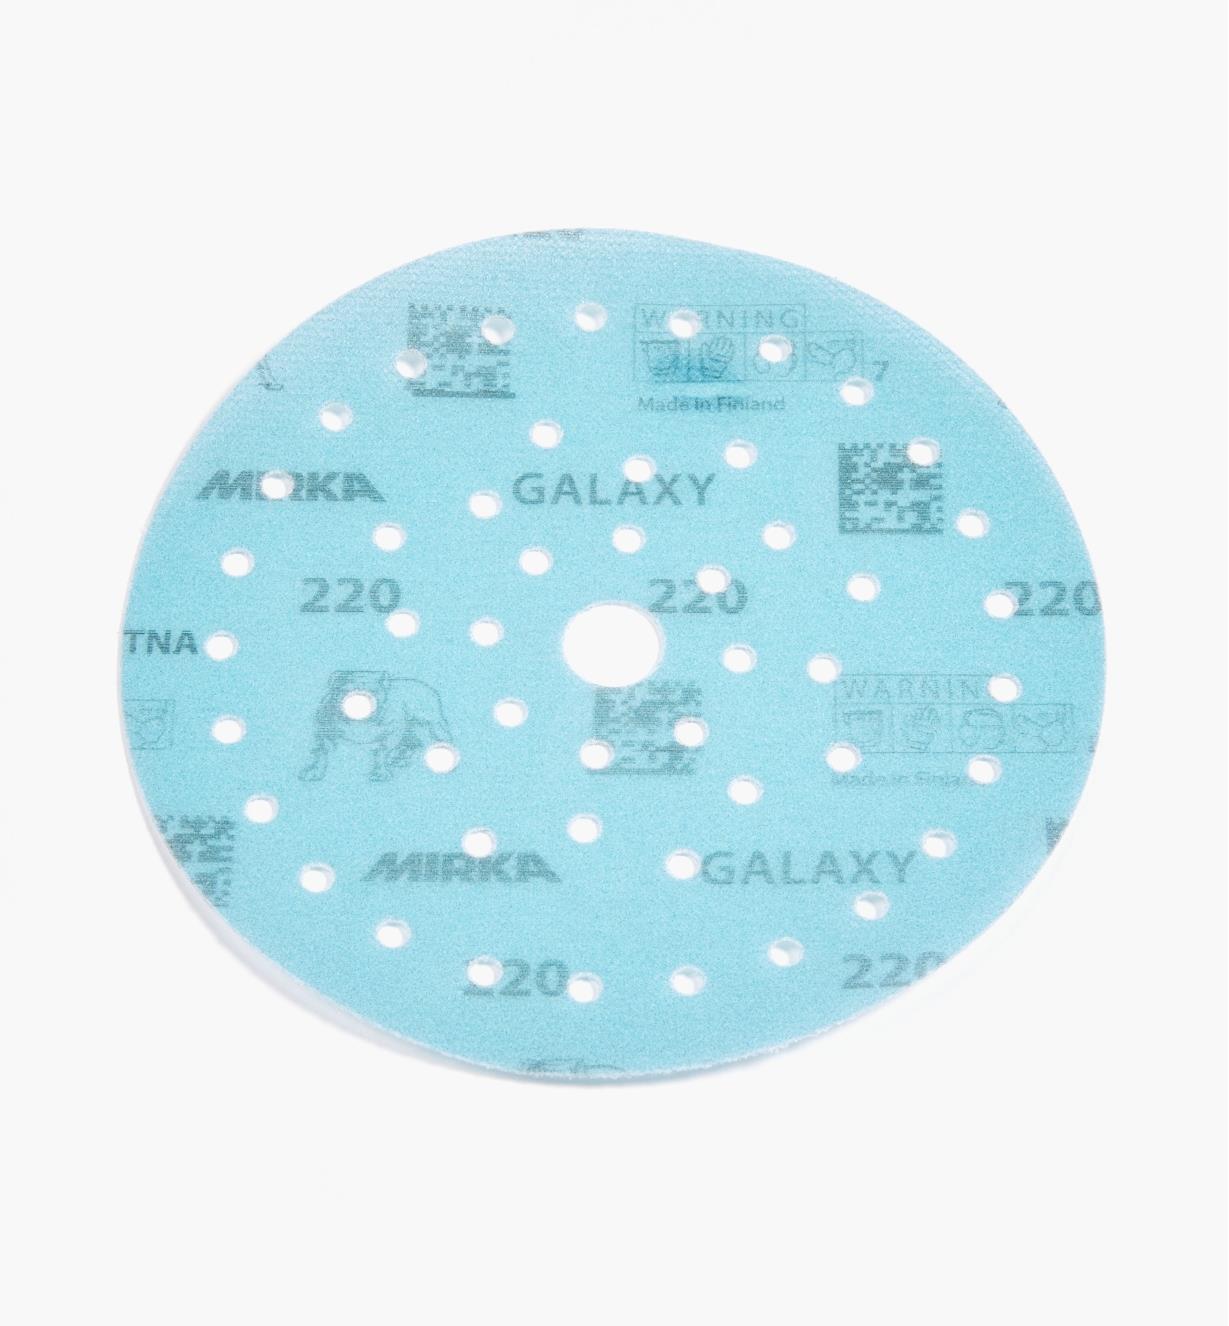 08K2147 - 220x 6" Galaxy Multifit Grip Disc, ea.